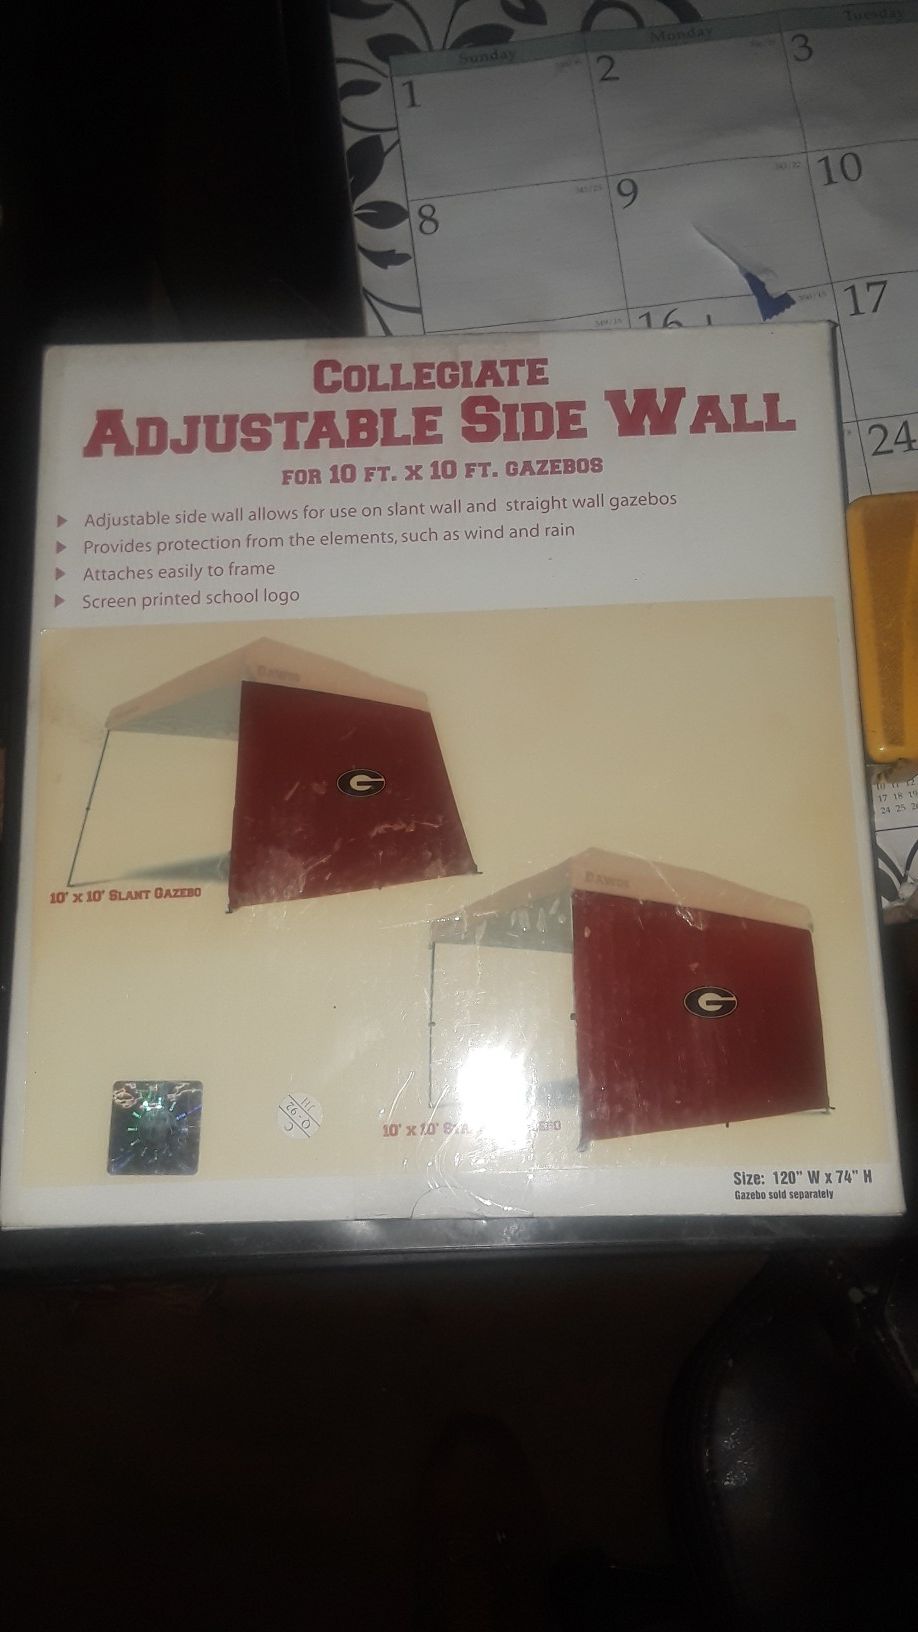 Adjustable side wall